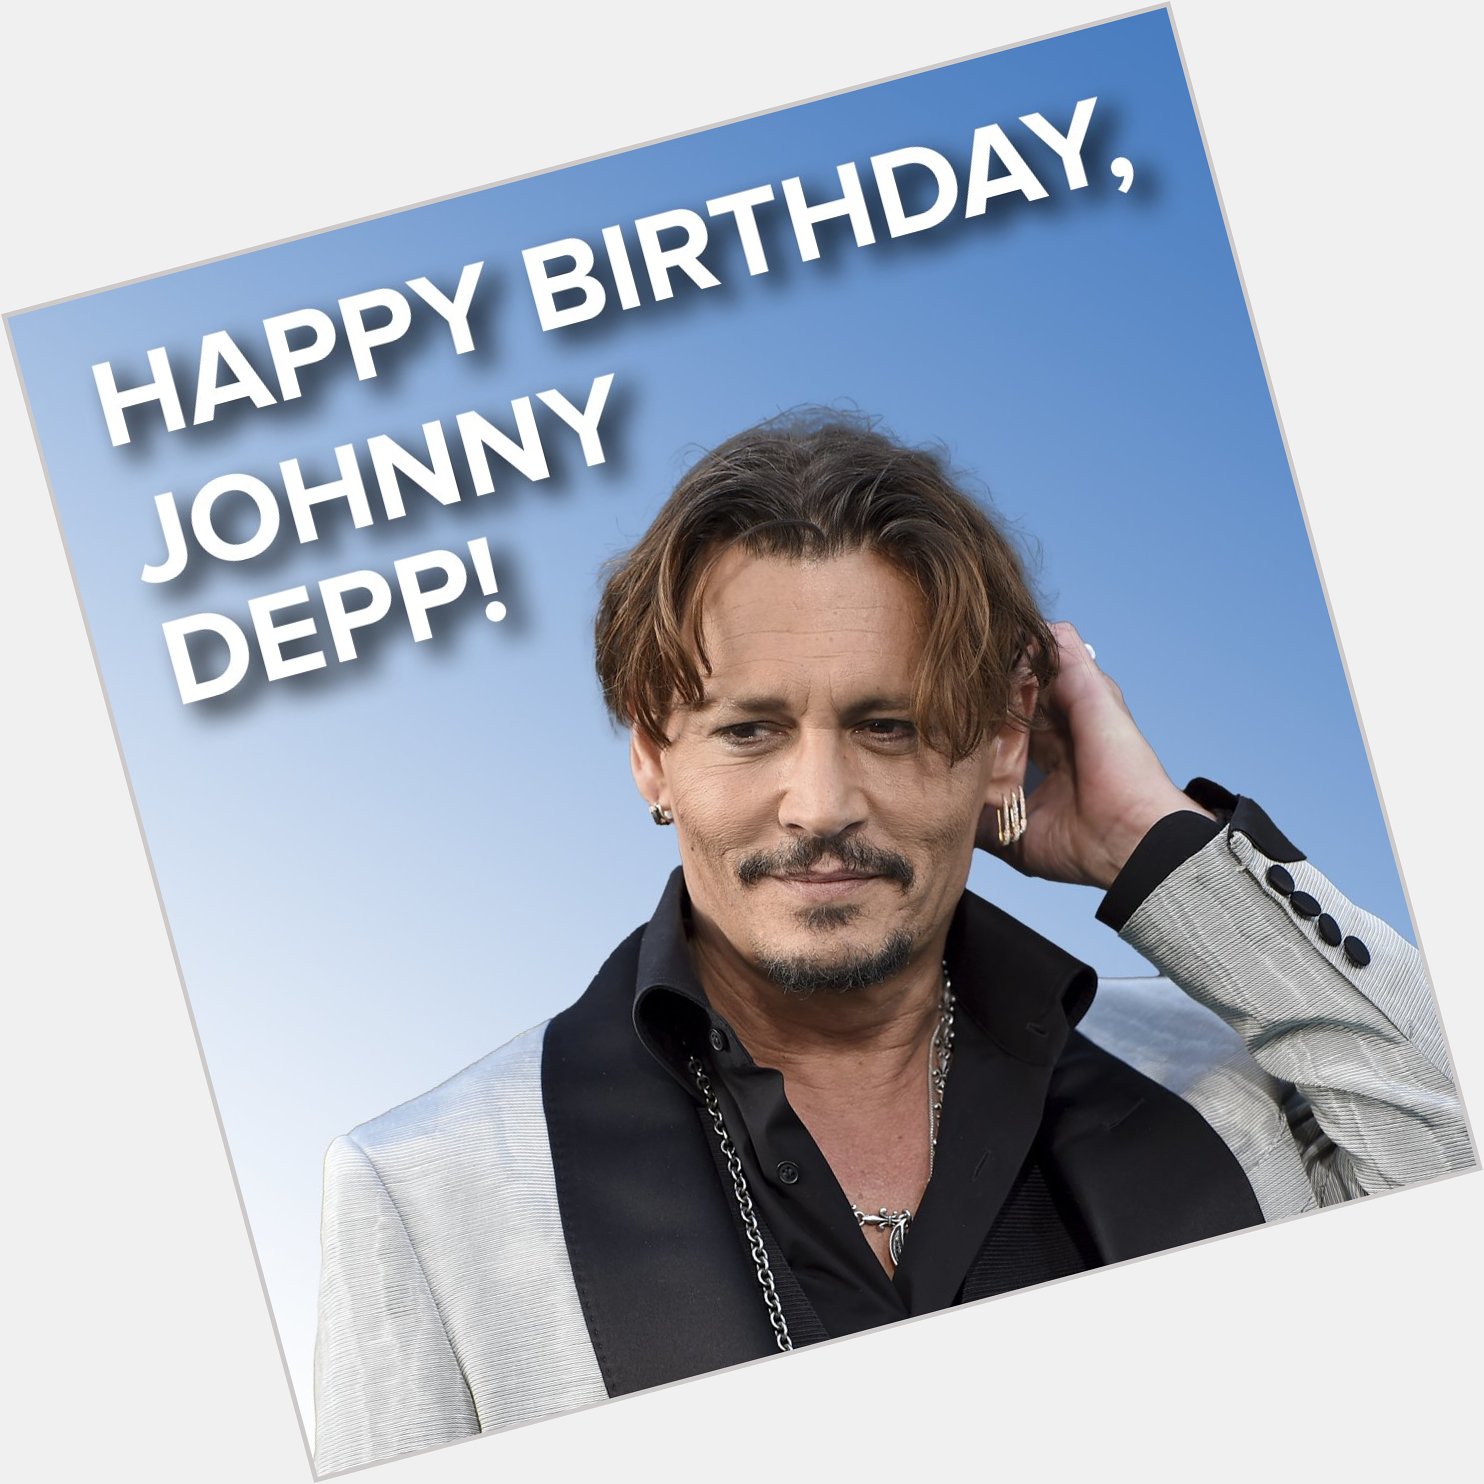 We want to wish Kentucky native Johnny Depp a \"Happy Birthday\" today!  